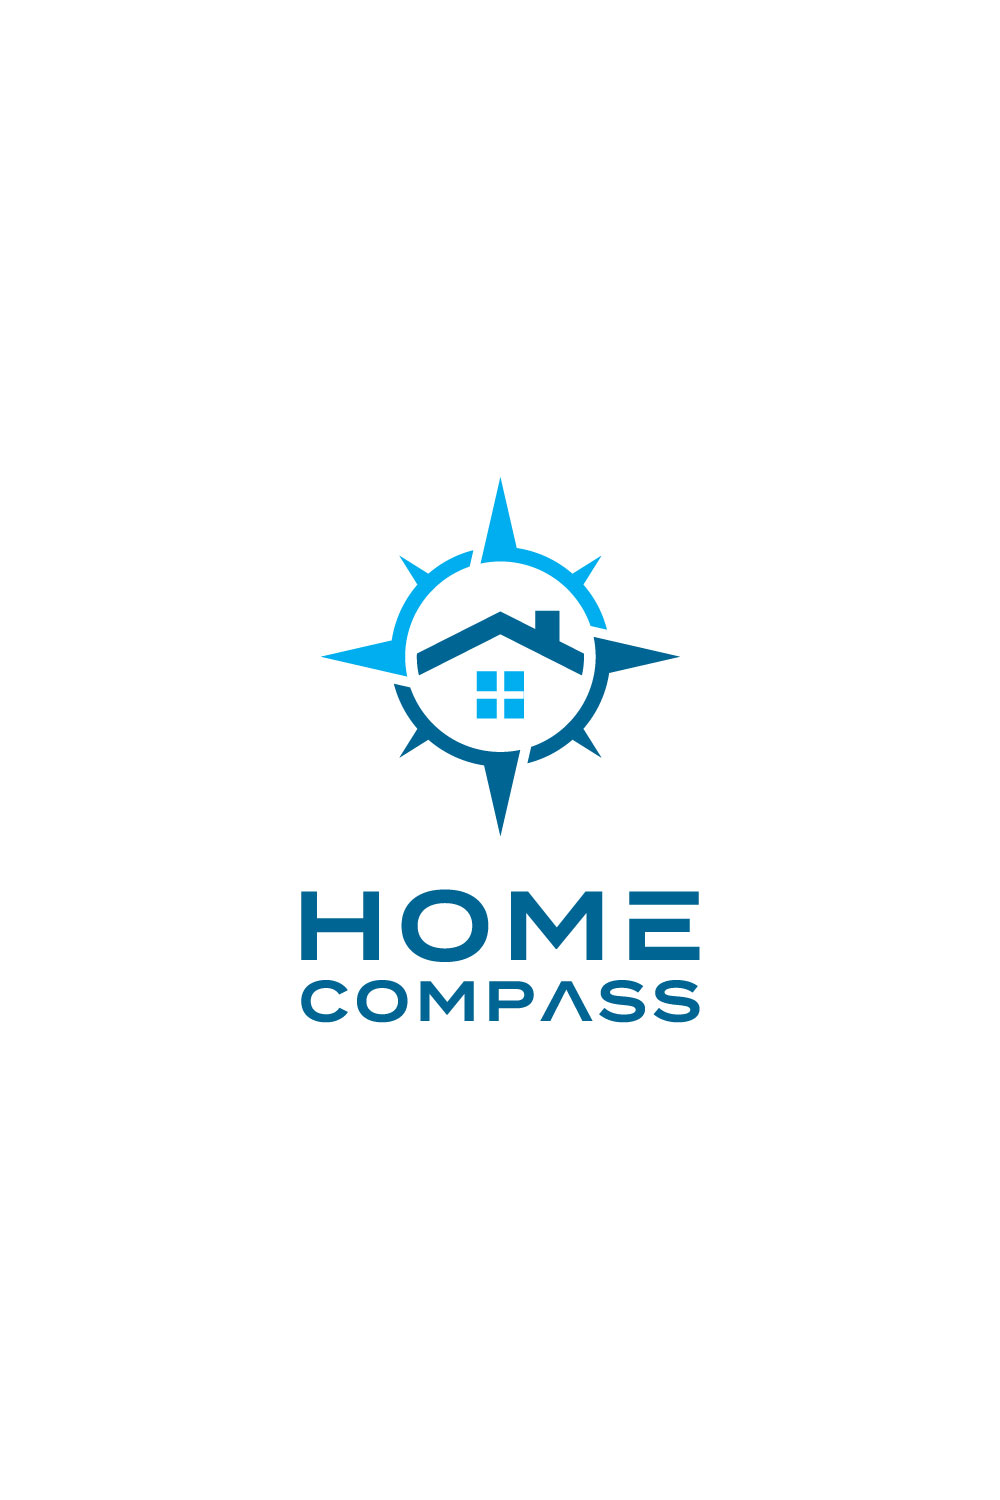 Home and Compass Logo Vector Design Pinterest.